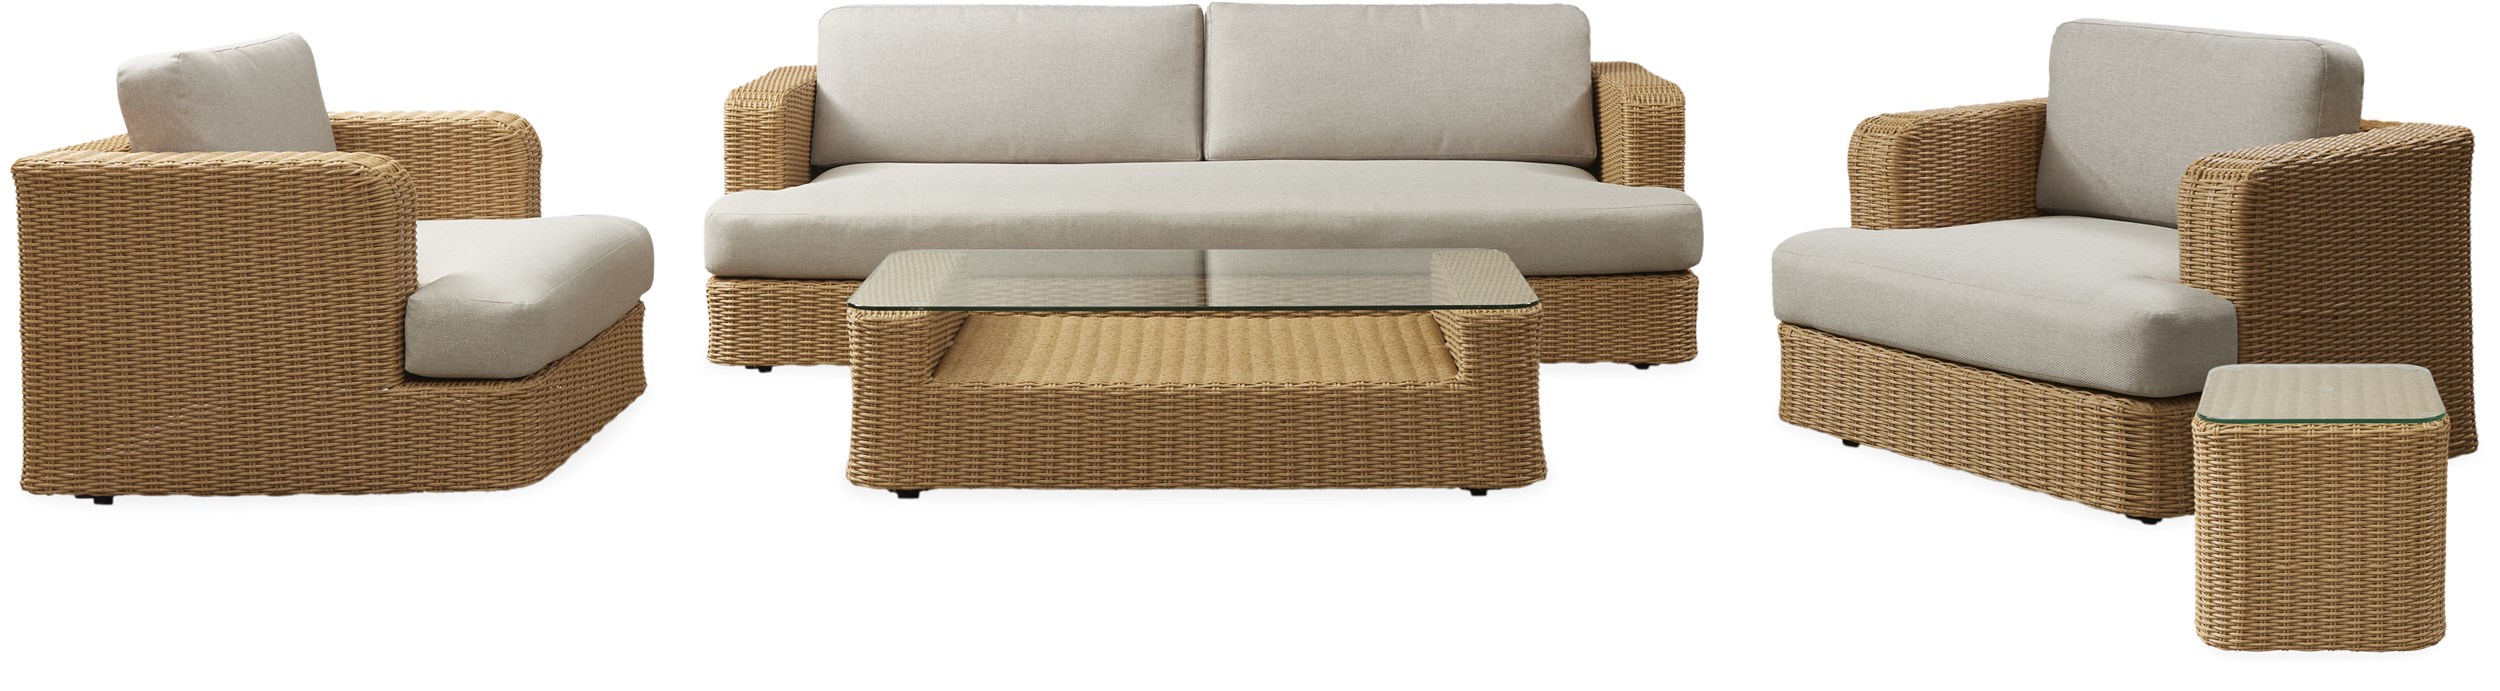 Luan Loungehavesæt med 2 stole + 1 sofa natur/sand + 2 borde natur/glas